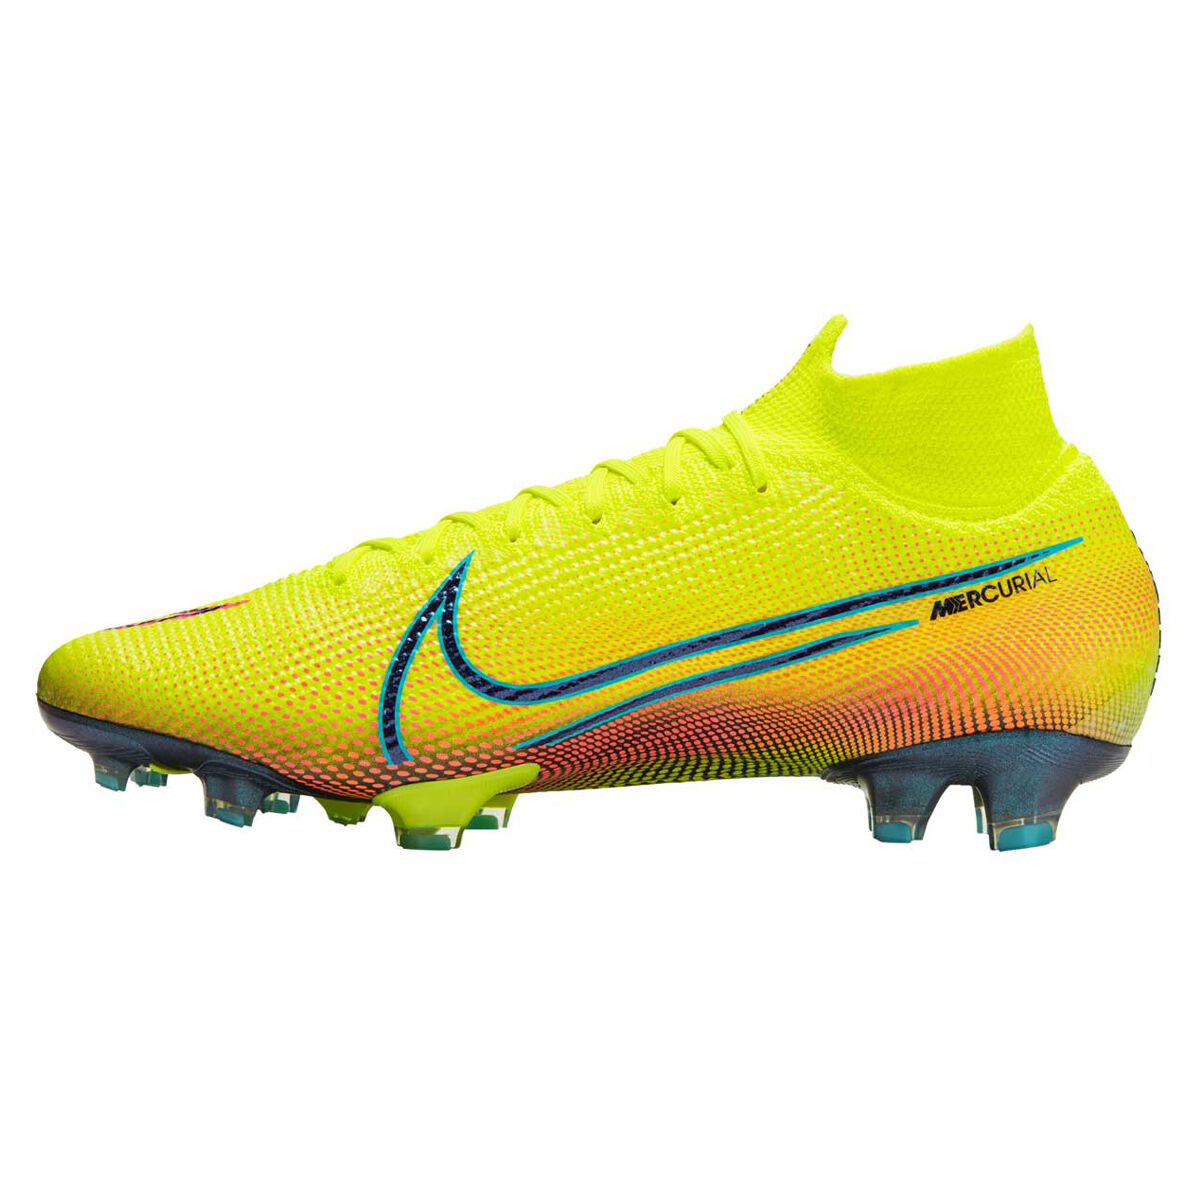 yellow nike football boots 